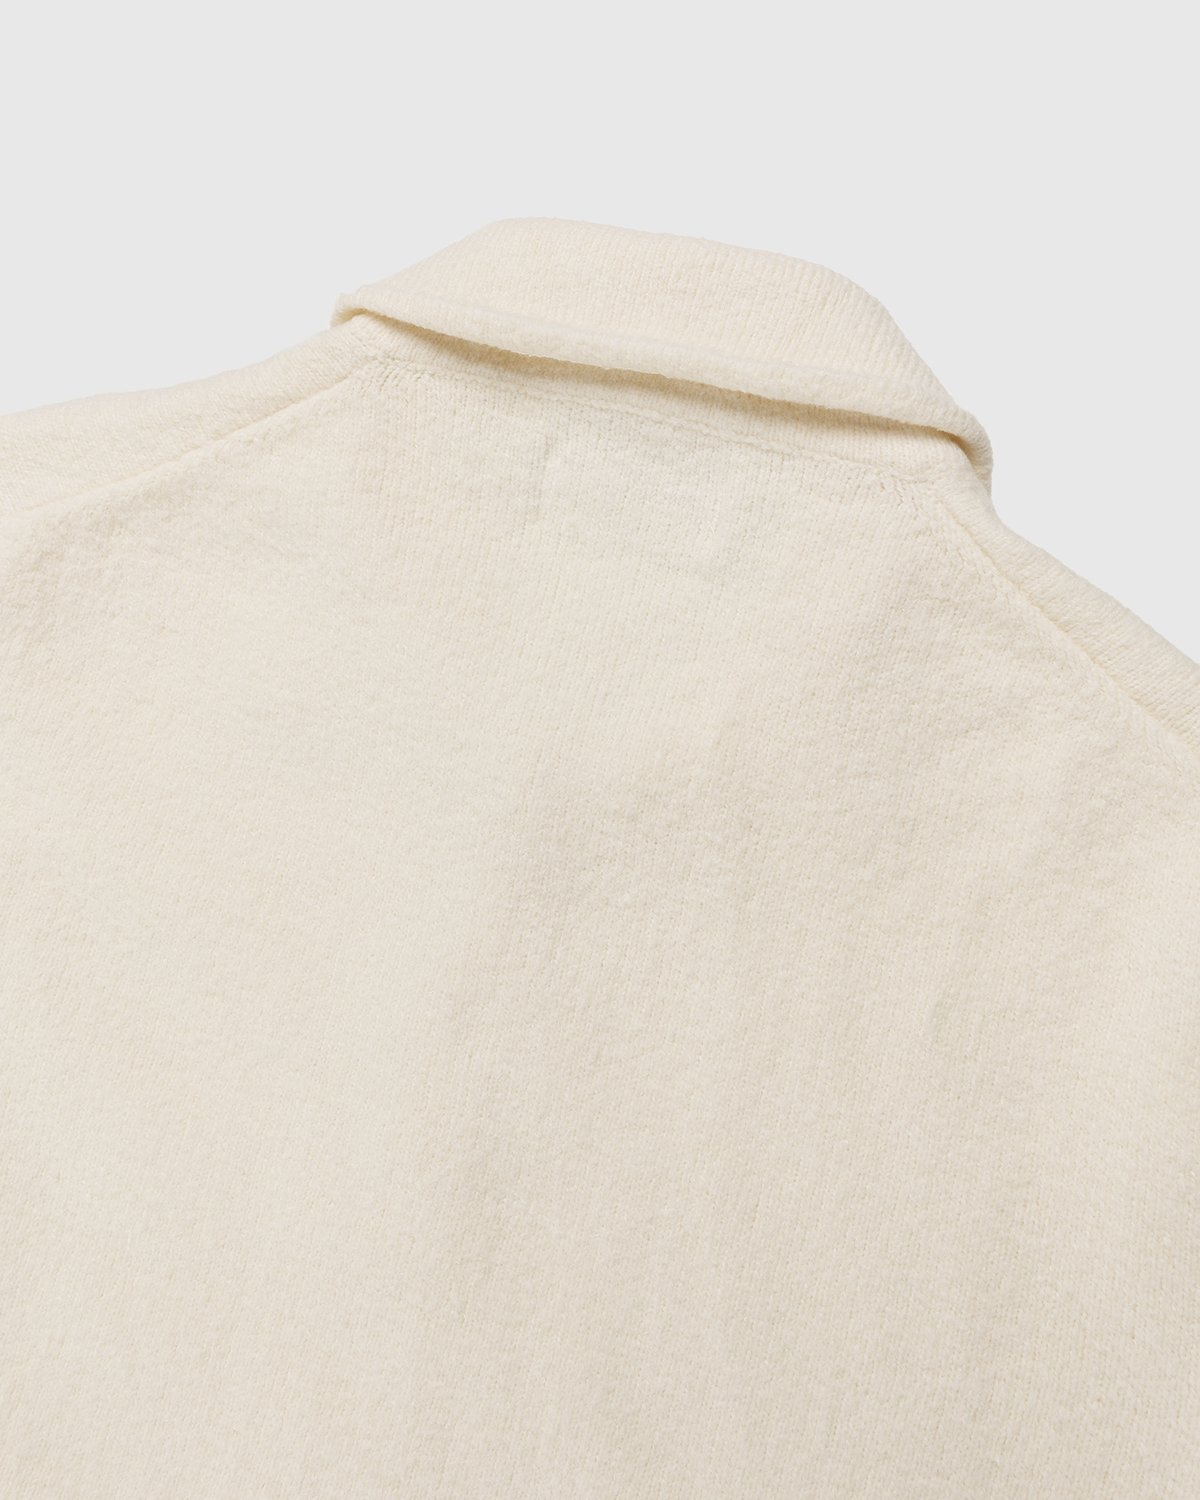 Stone Island - 549D2 Knit Polo Shirt Natural - Clothing - White - Image 3